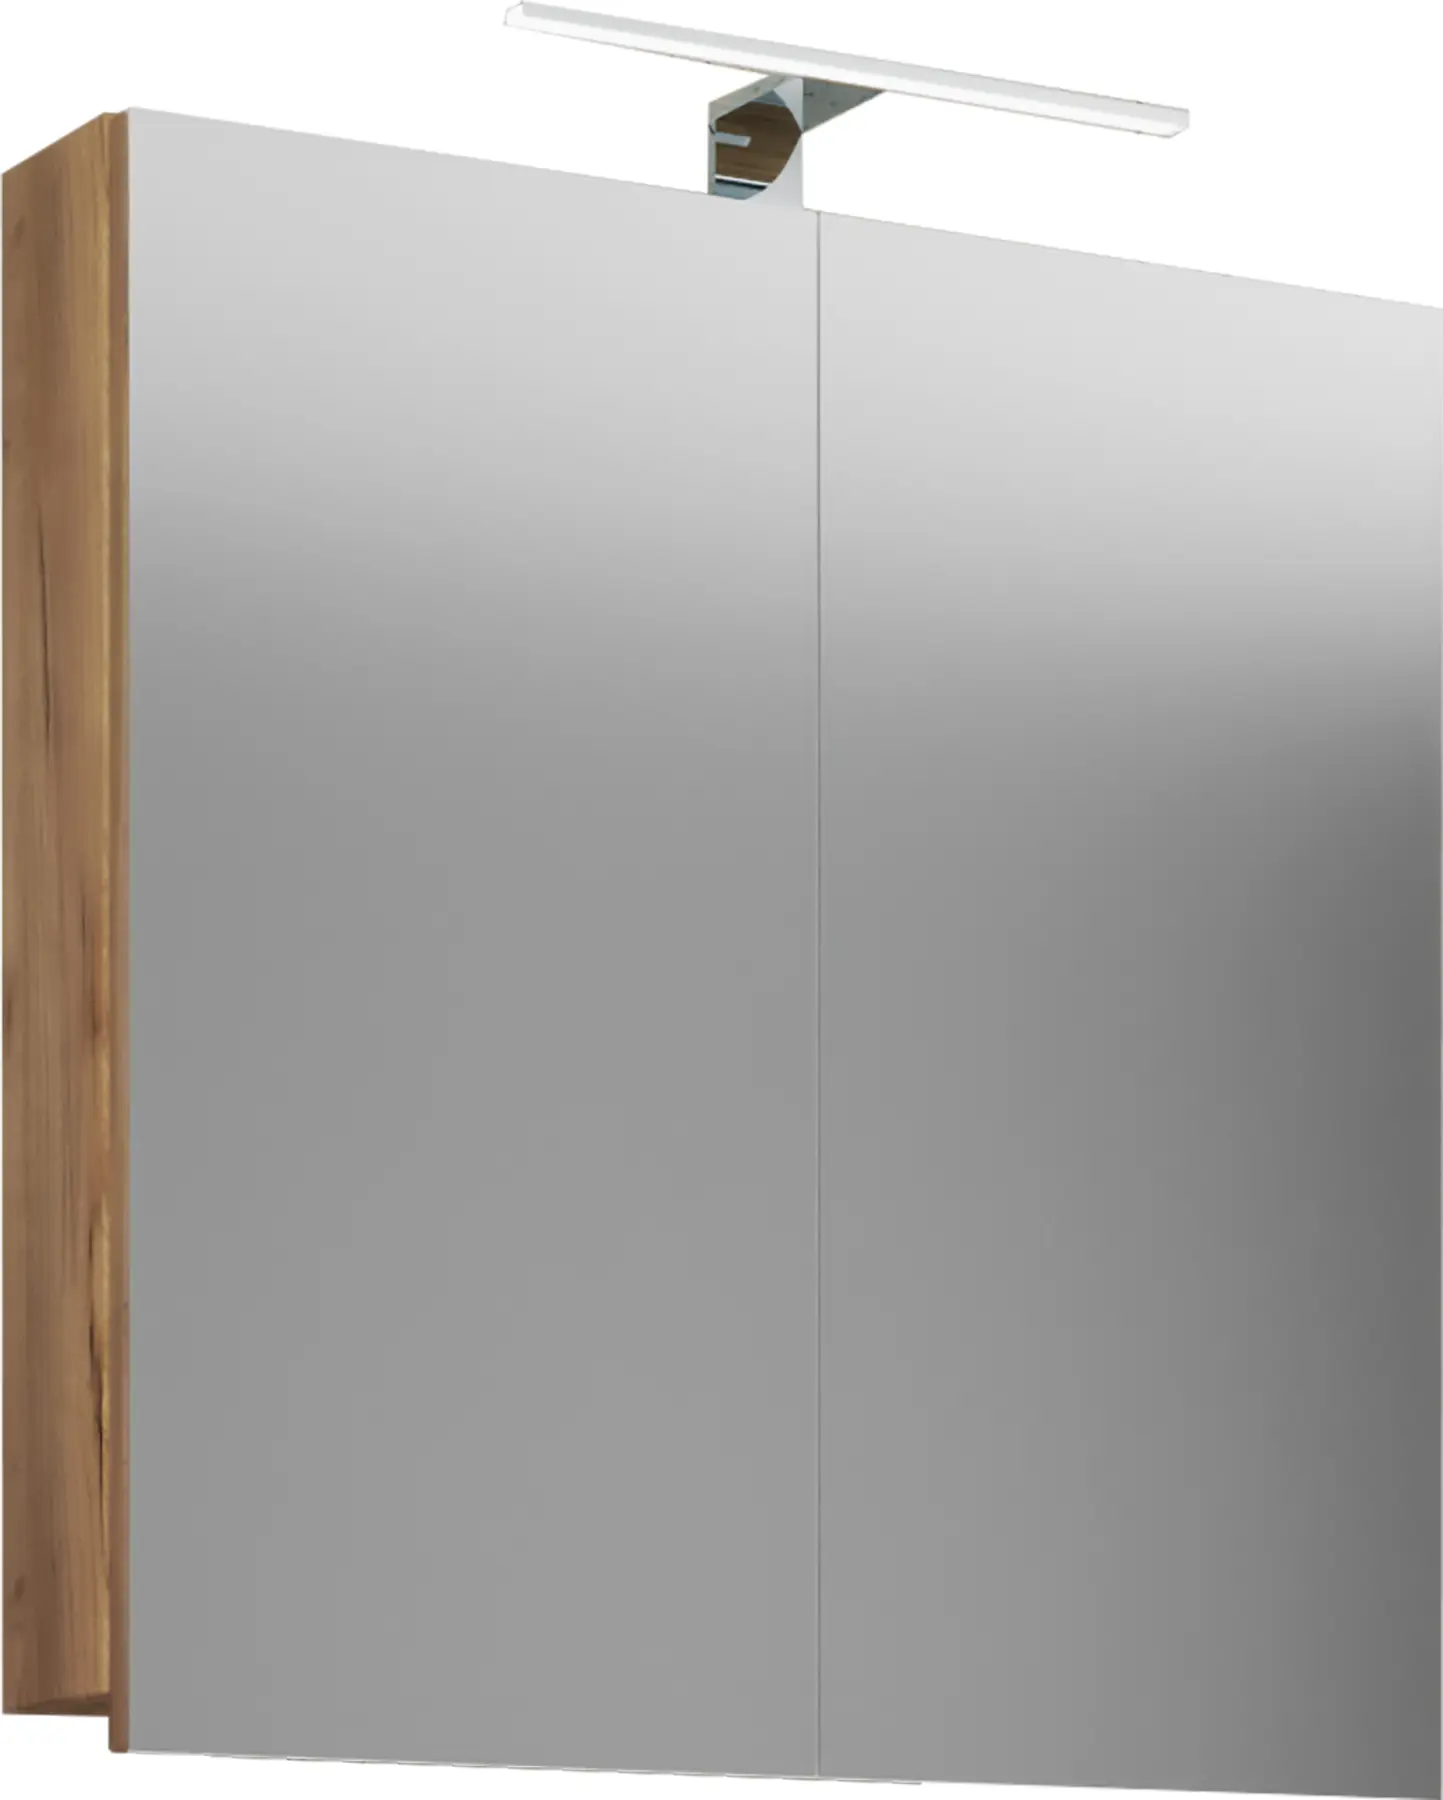 Spiegel Badinos 60cm Holz